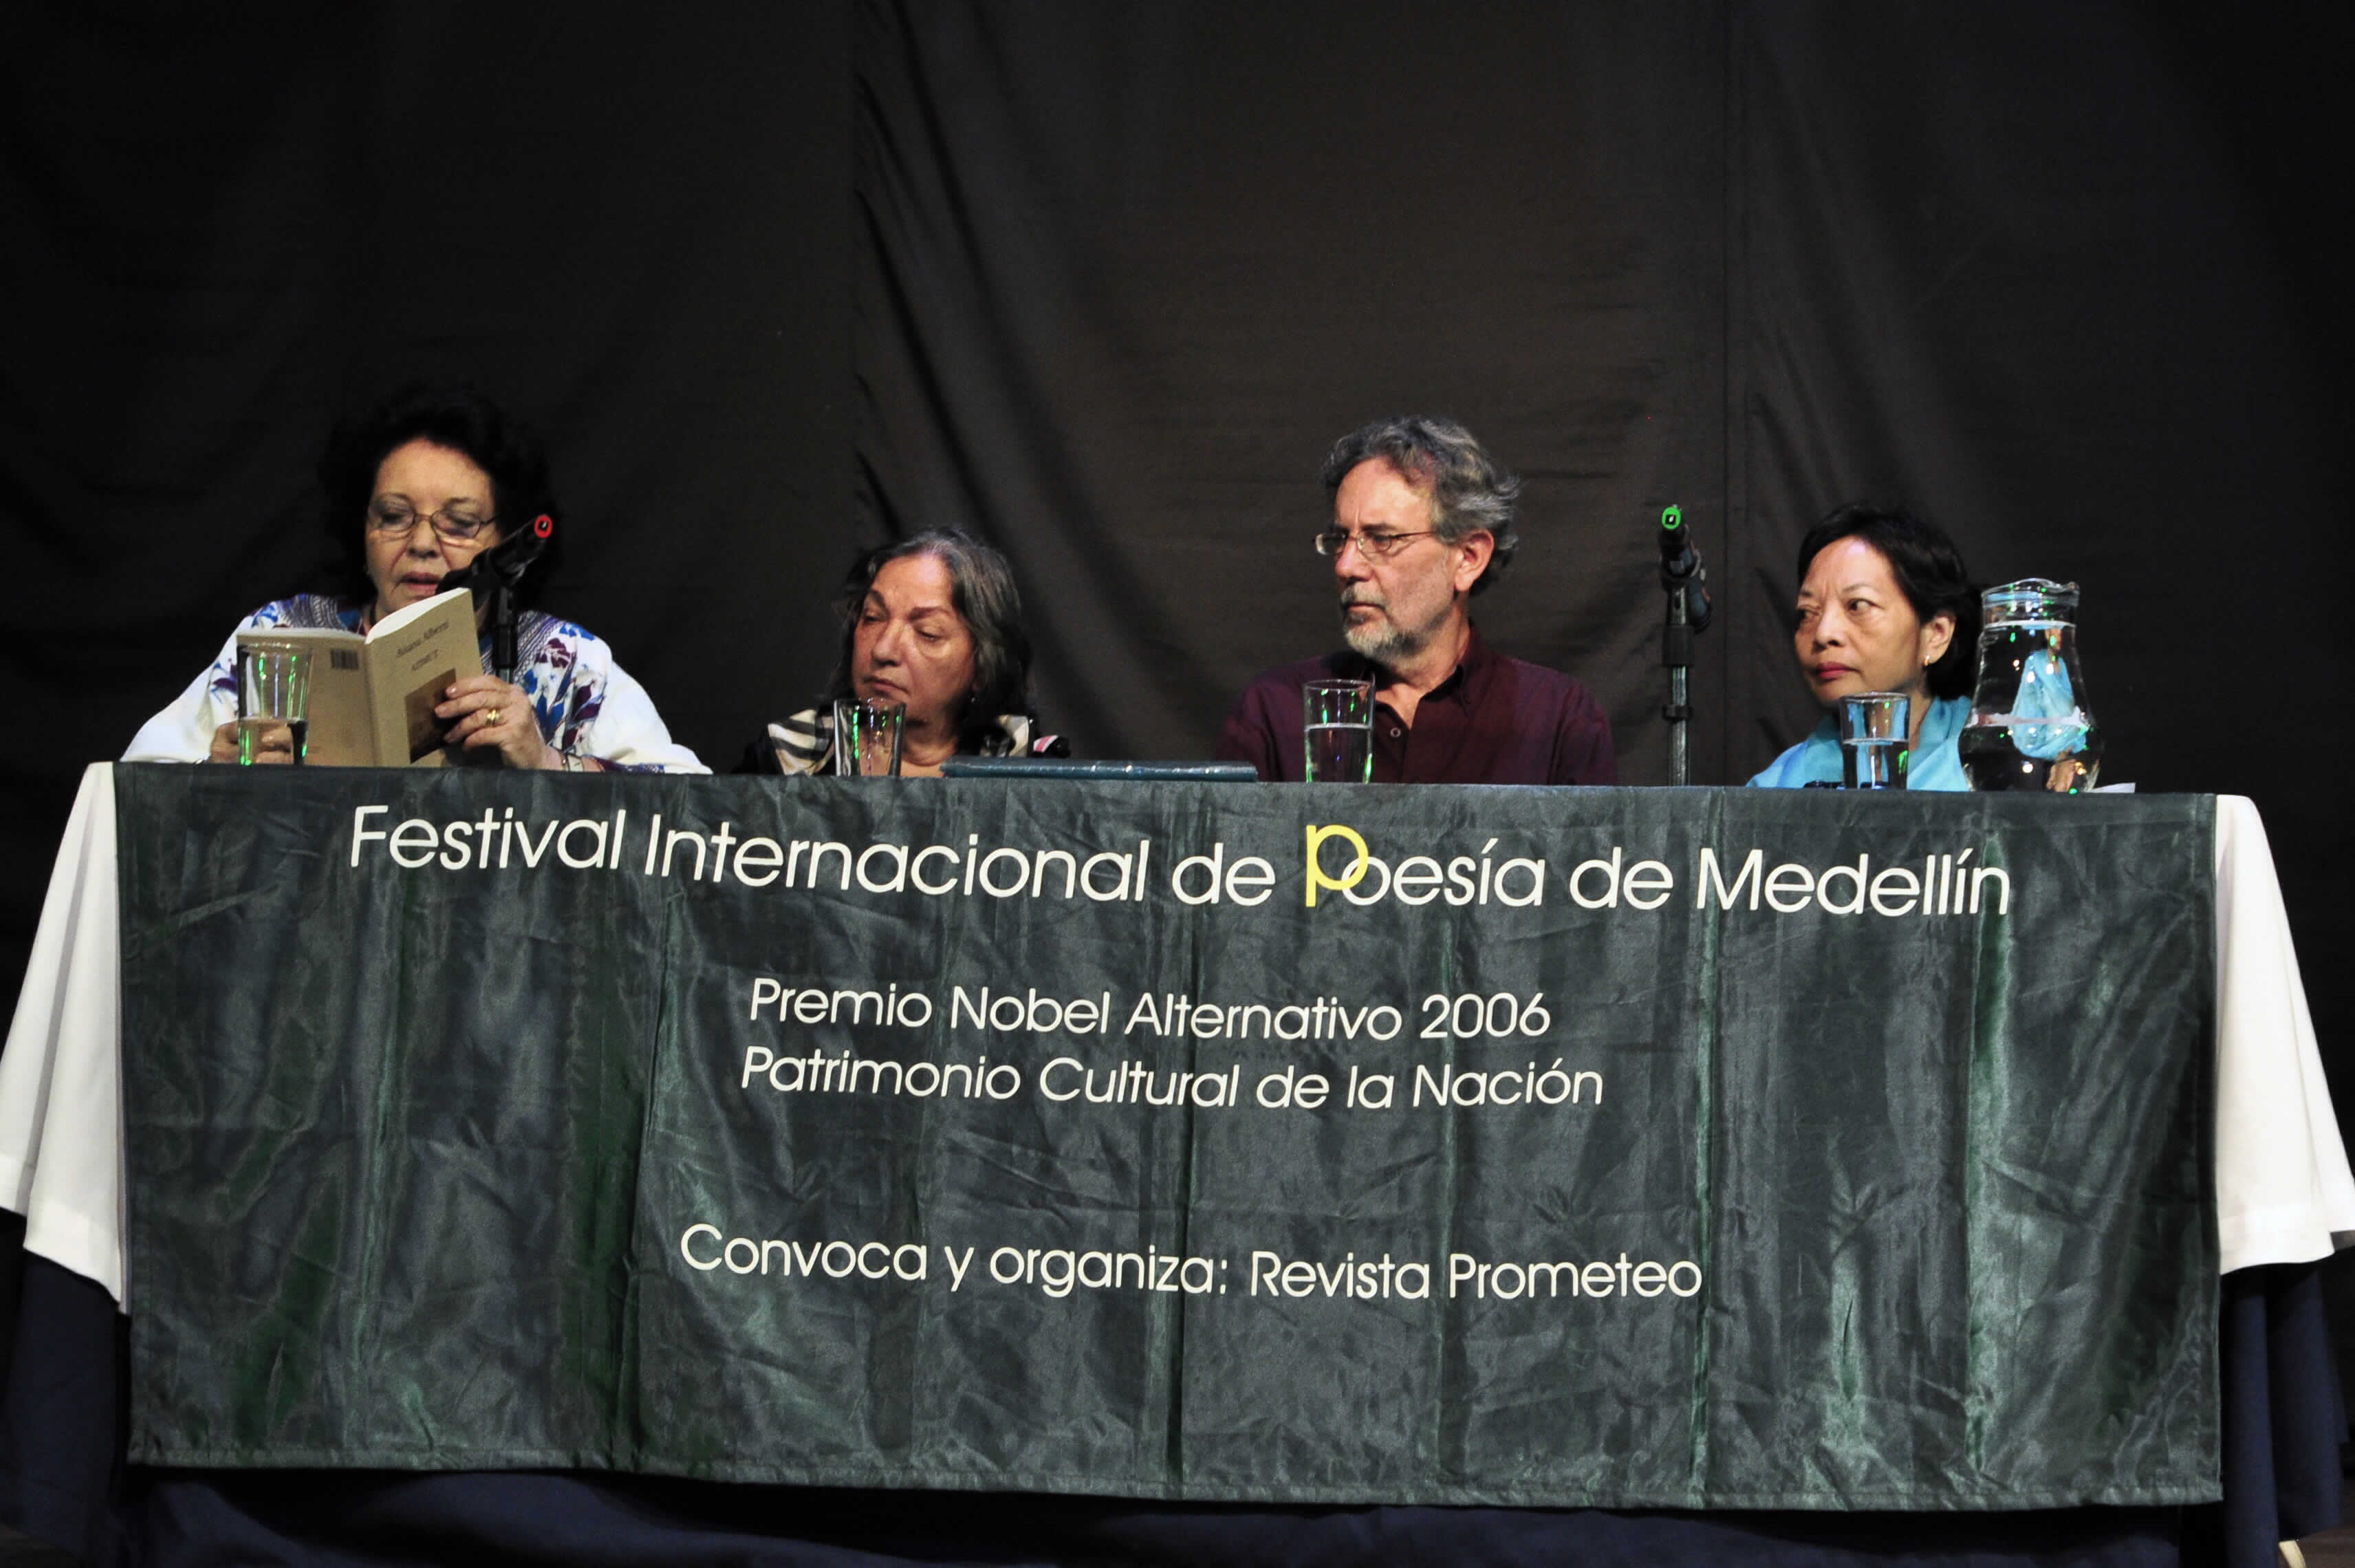 De izquierda a derecha: Aitana Alberti, Amparo Inés Osorio, Les Wicks, Marra PL. Lanot